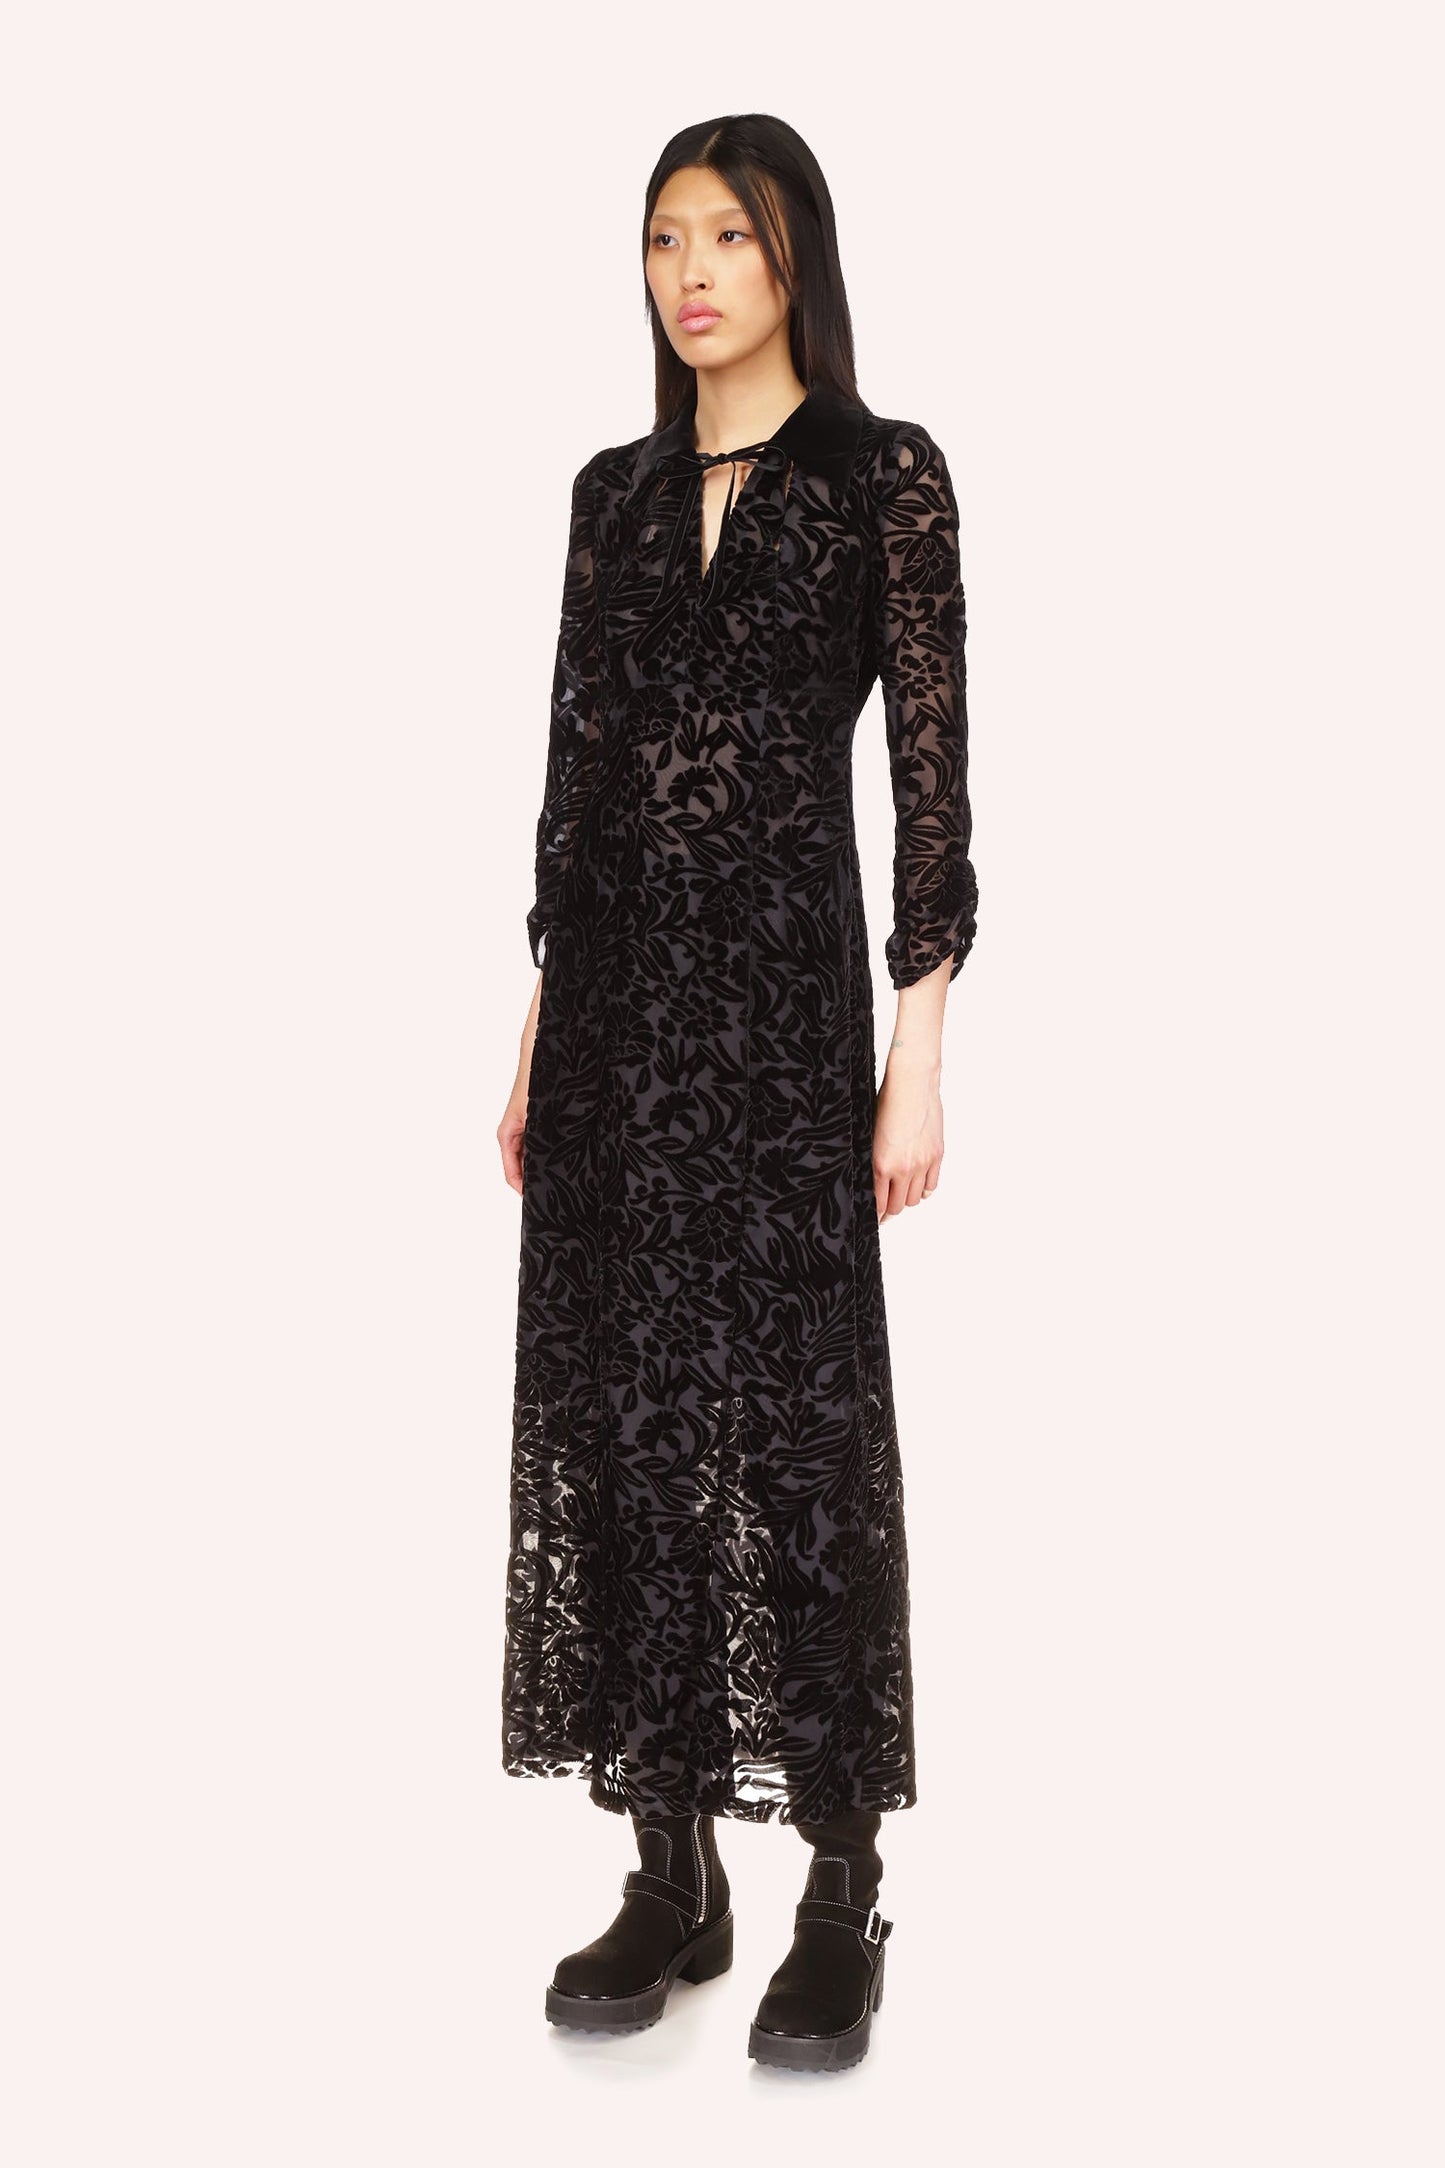 Velvet Burnout Dress Black by designer Anna Sui